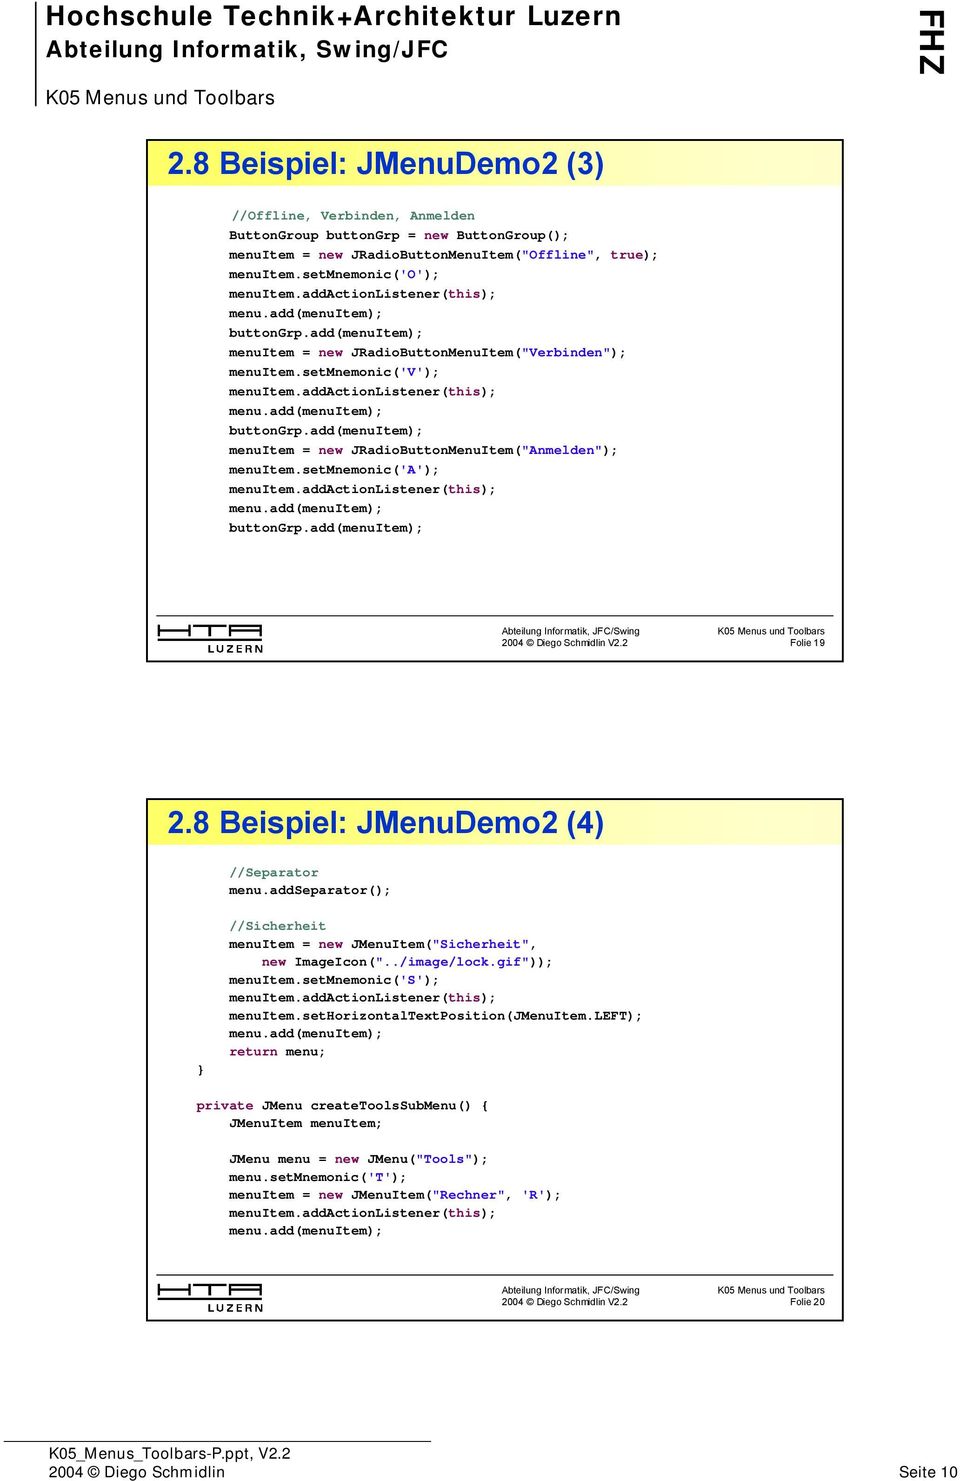 setmnemonic('a'); buttongrp.add(menuitem); Folie 19 2.8 Beispiel: JMenuDemo2 (4) //Separator menu.addseparator(); //Sicherheit menuitem = new JMenuItem("Sicherheit", new ImageIcon("../image/lock.